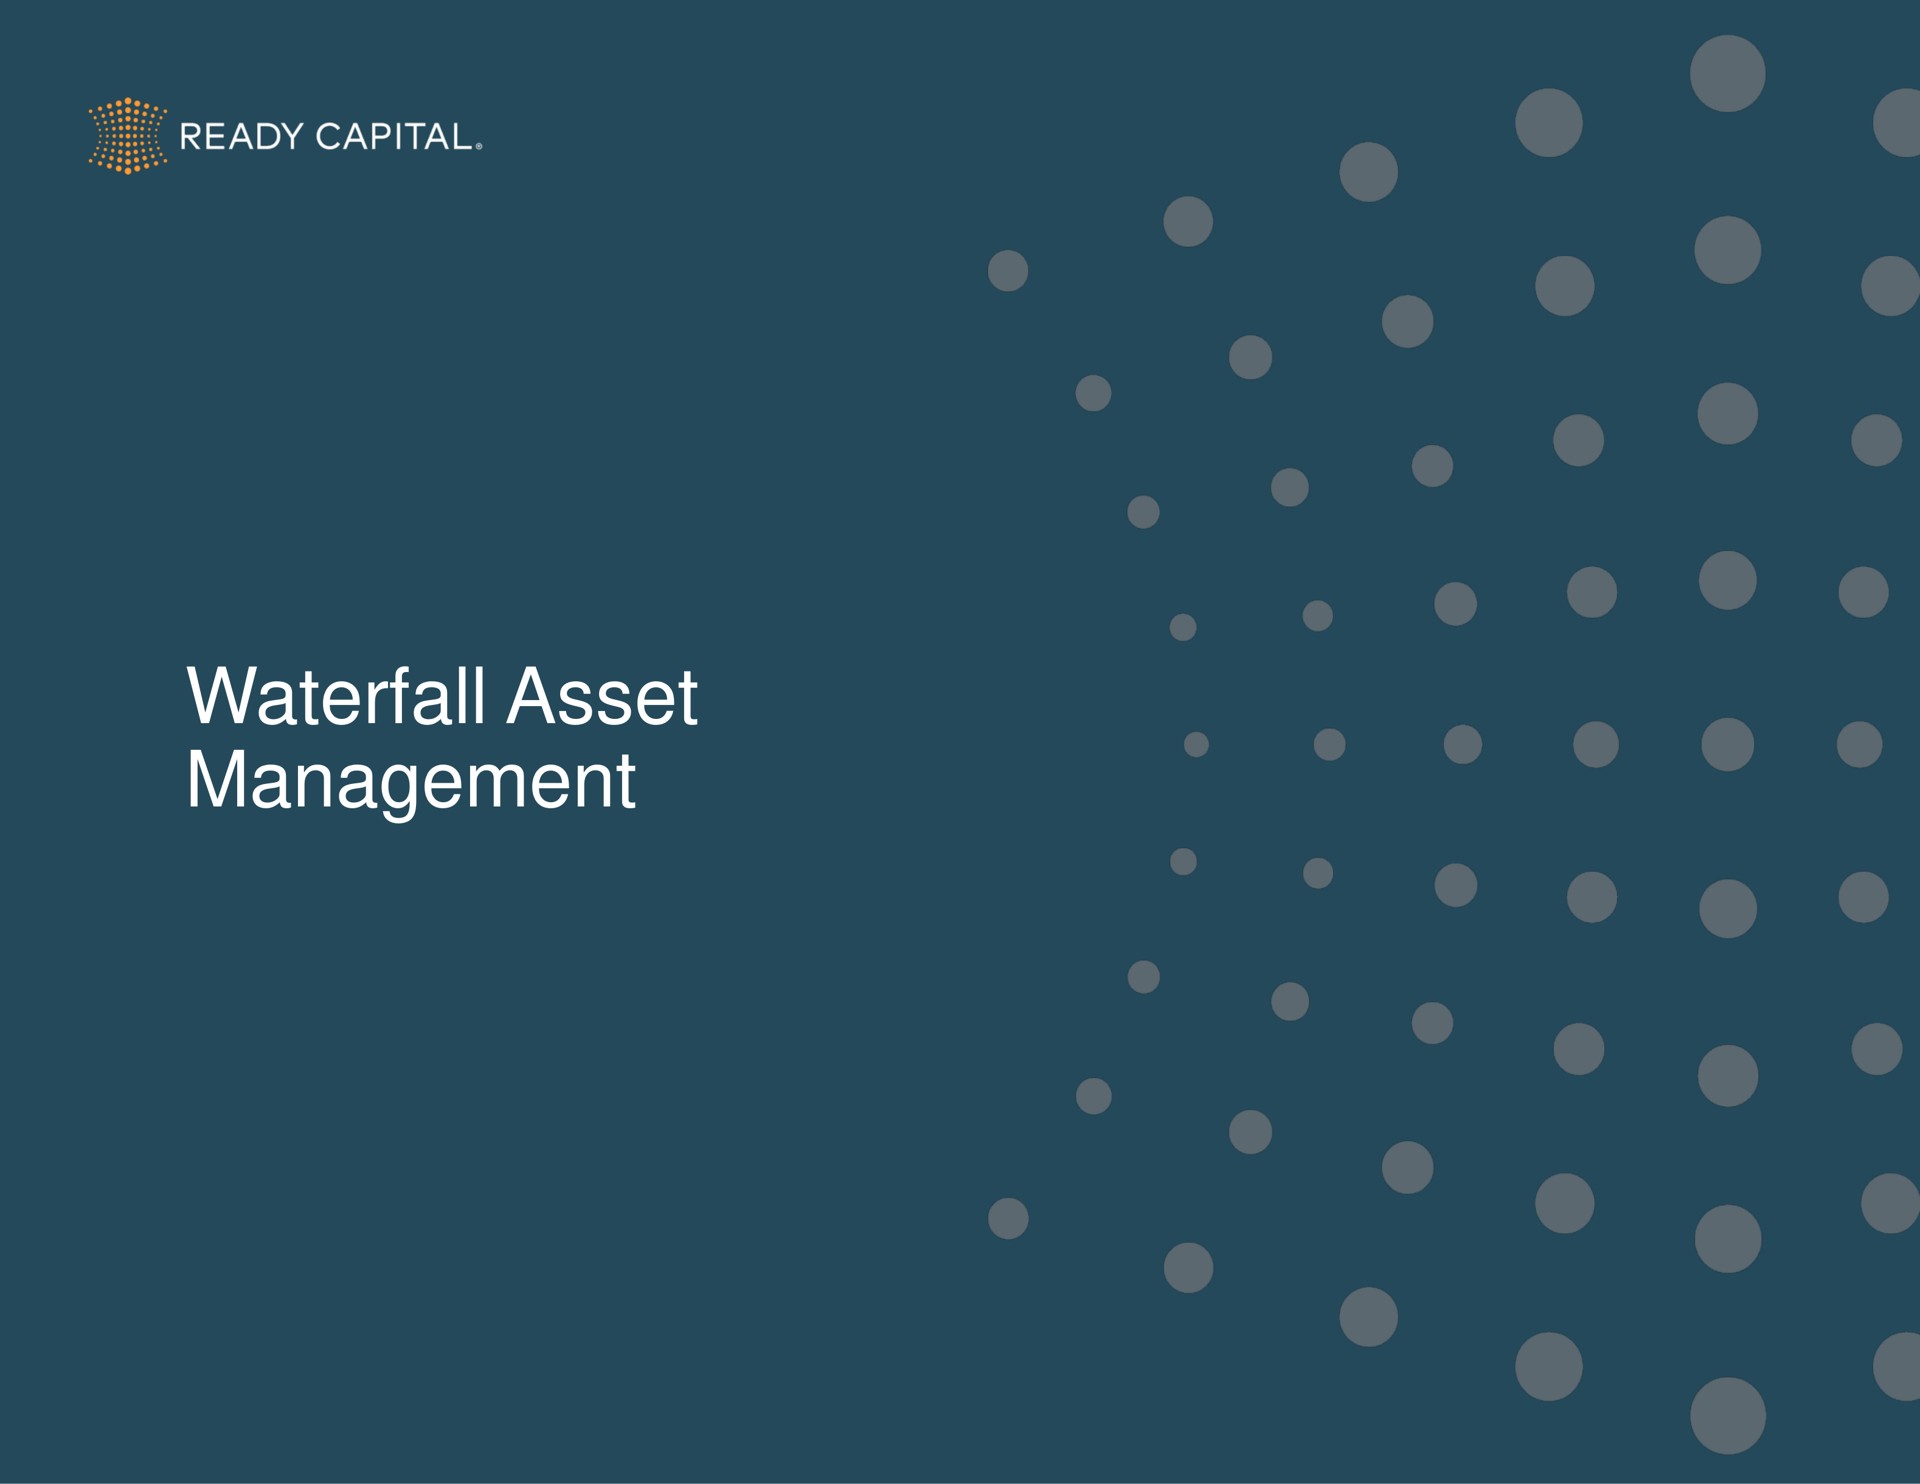 waterfall asset management | Ready Capital